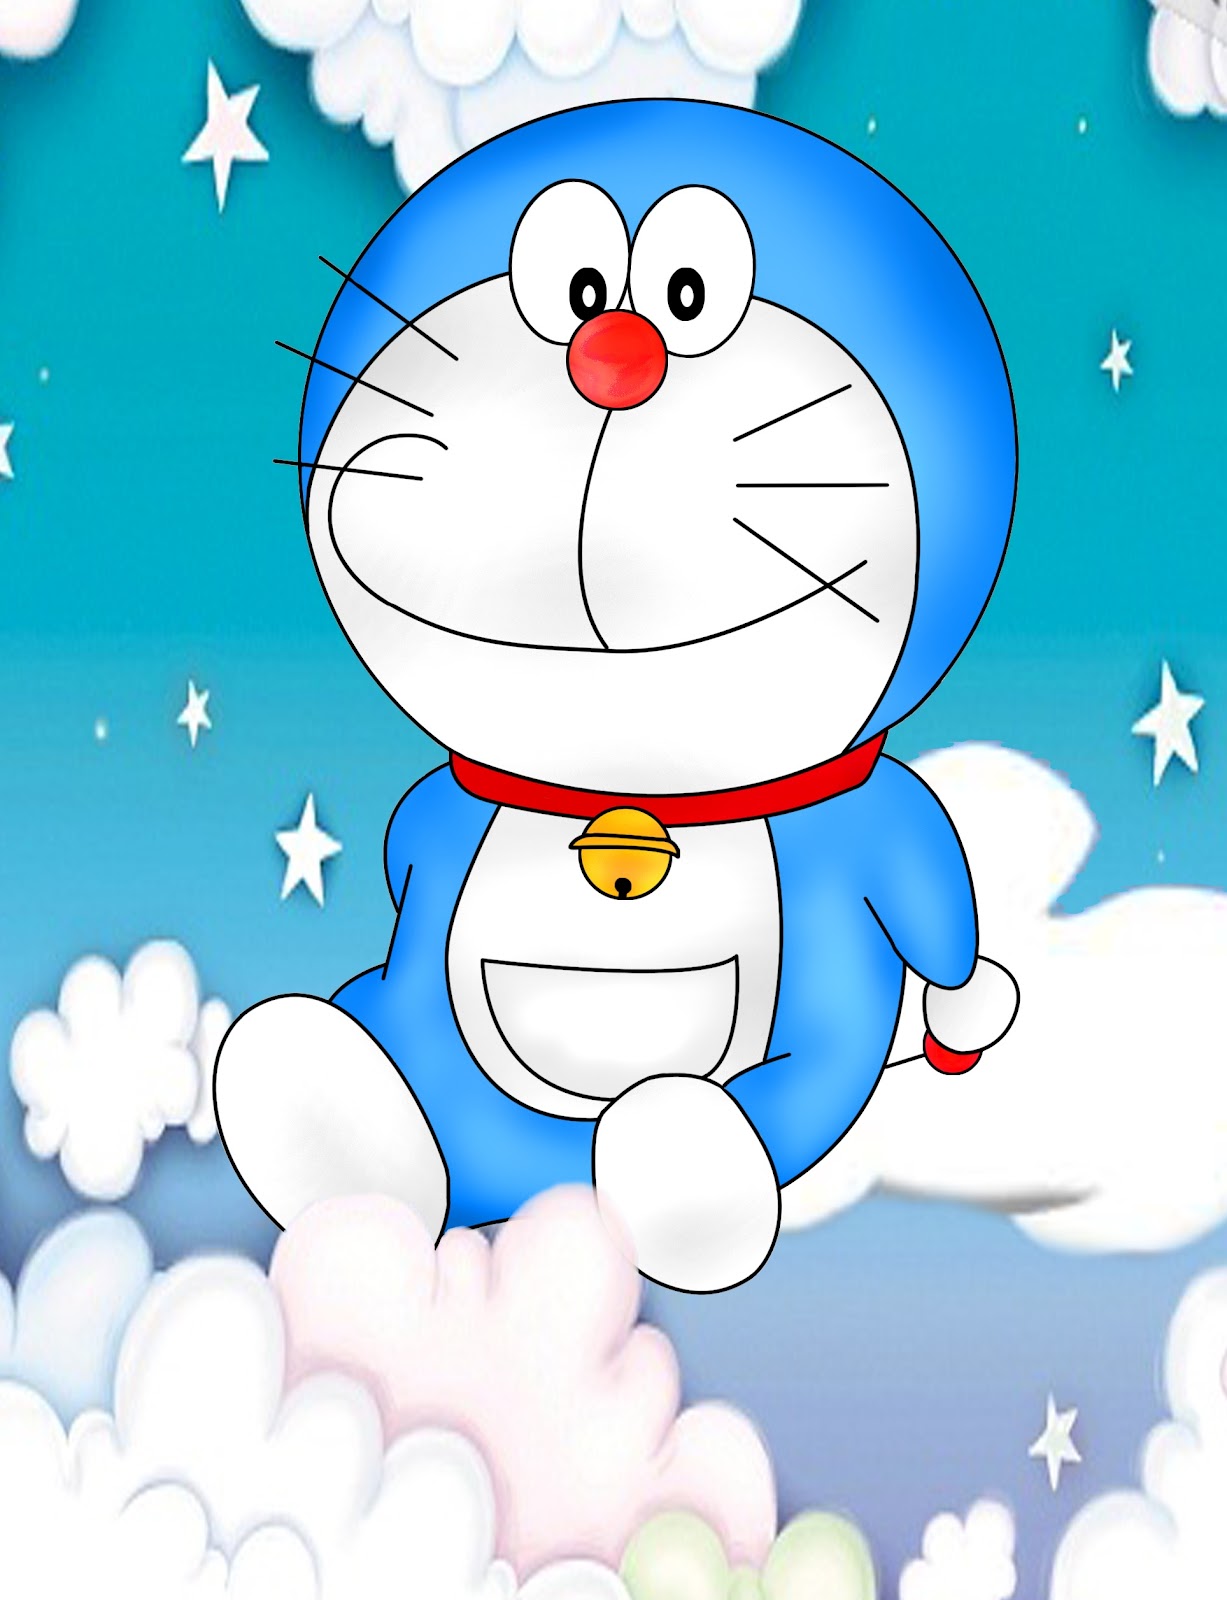 Jual Garskin Samsung Grand 2 Doraemon Unik Store Gdc Tokopedia